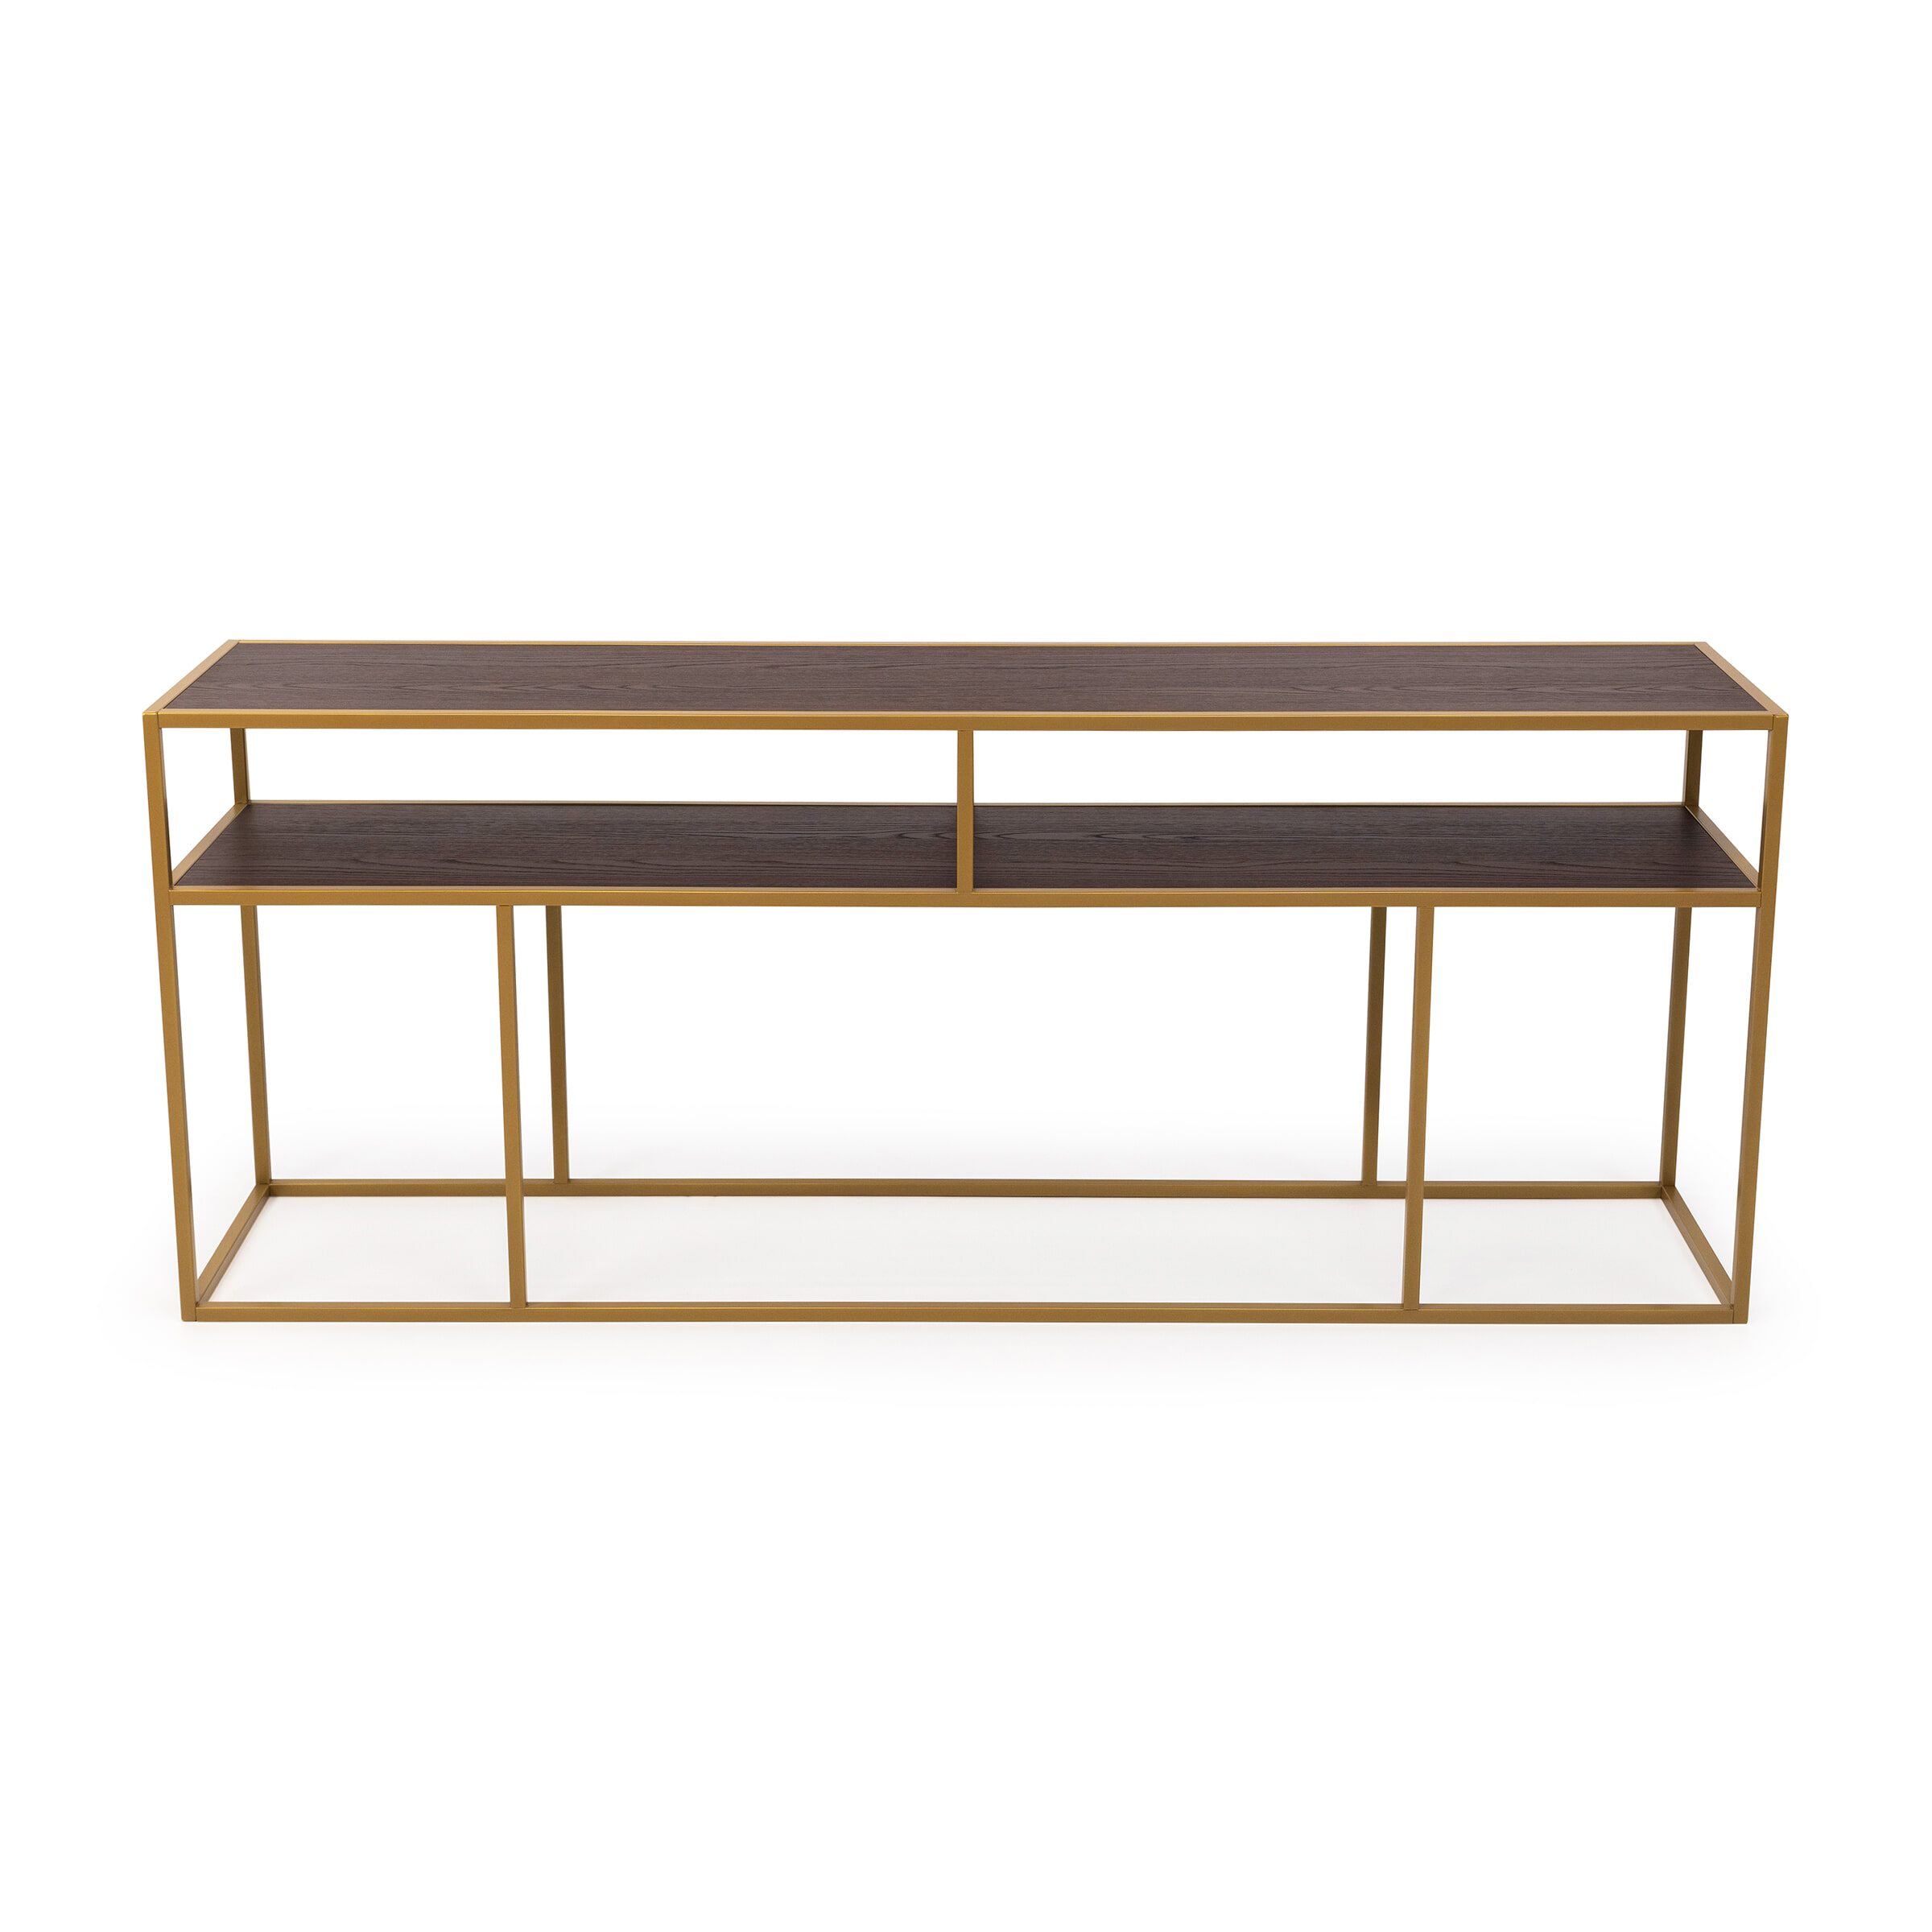 Stalux Side-table Teun 200cm - goud / bruin hout